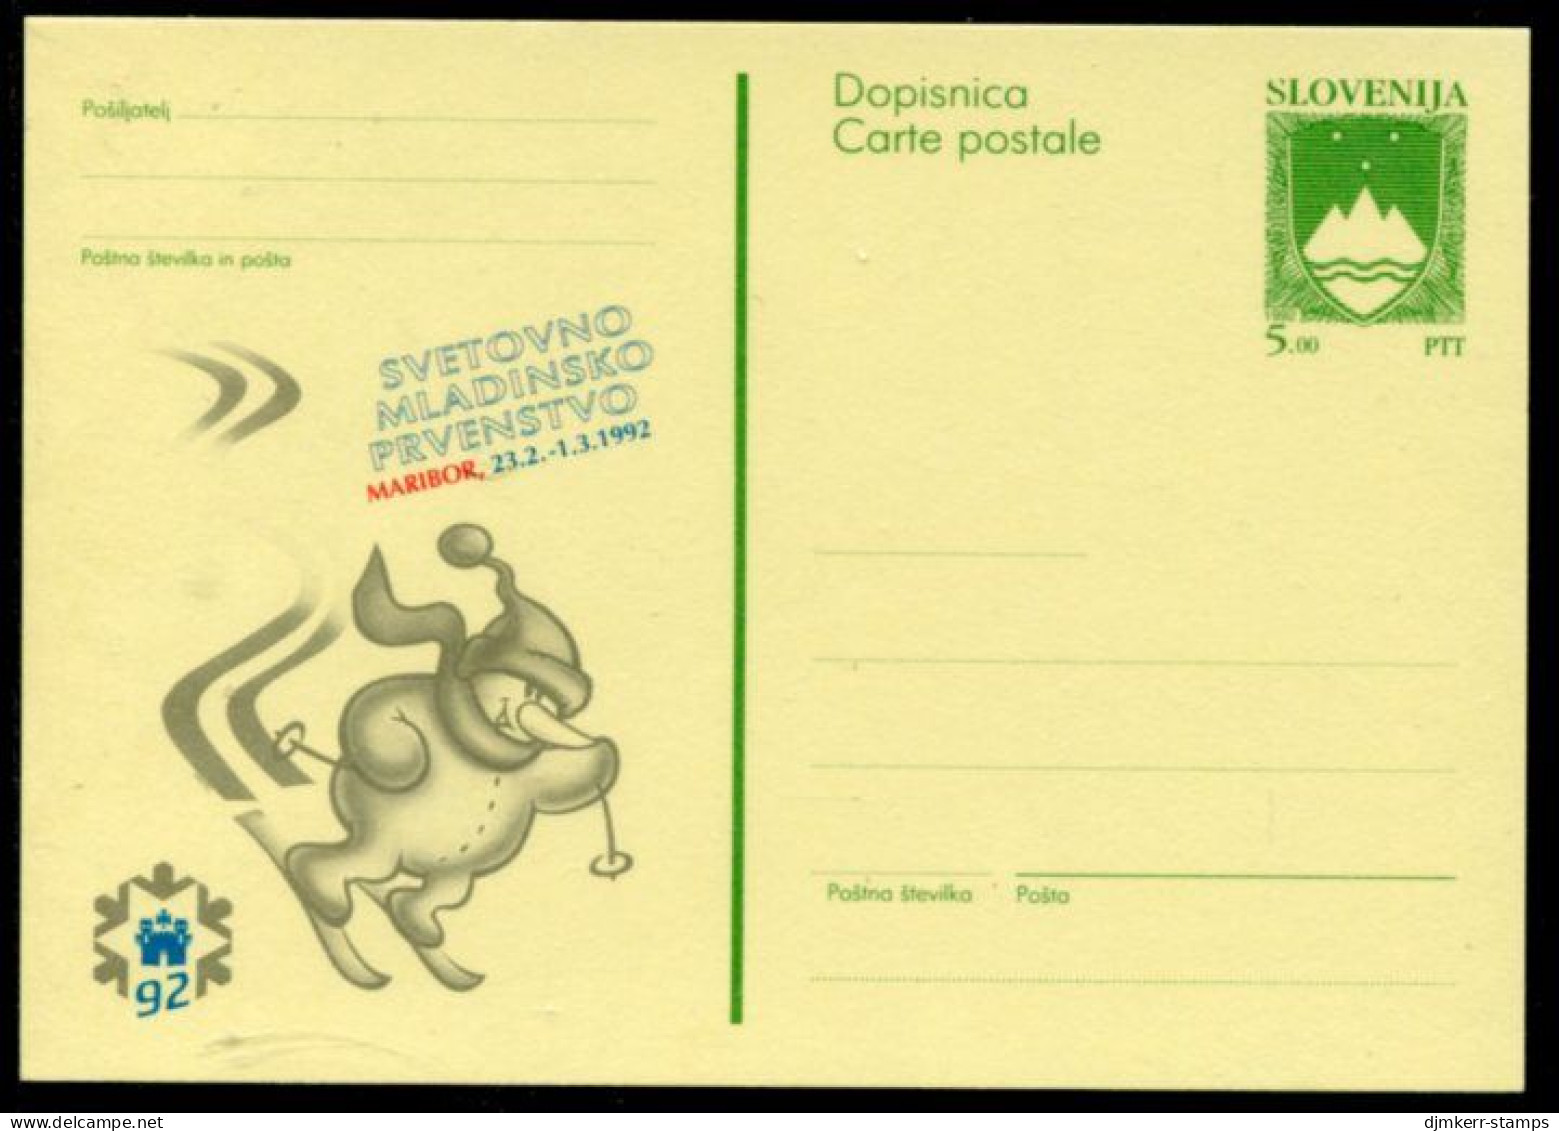 SLOVENIA 1992 5.00 T.  Junior Ski  World Championships Stationery Card, Unused.   Michel P2 - Slovenia